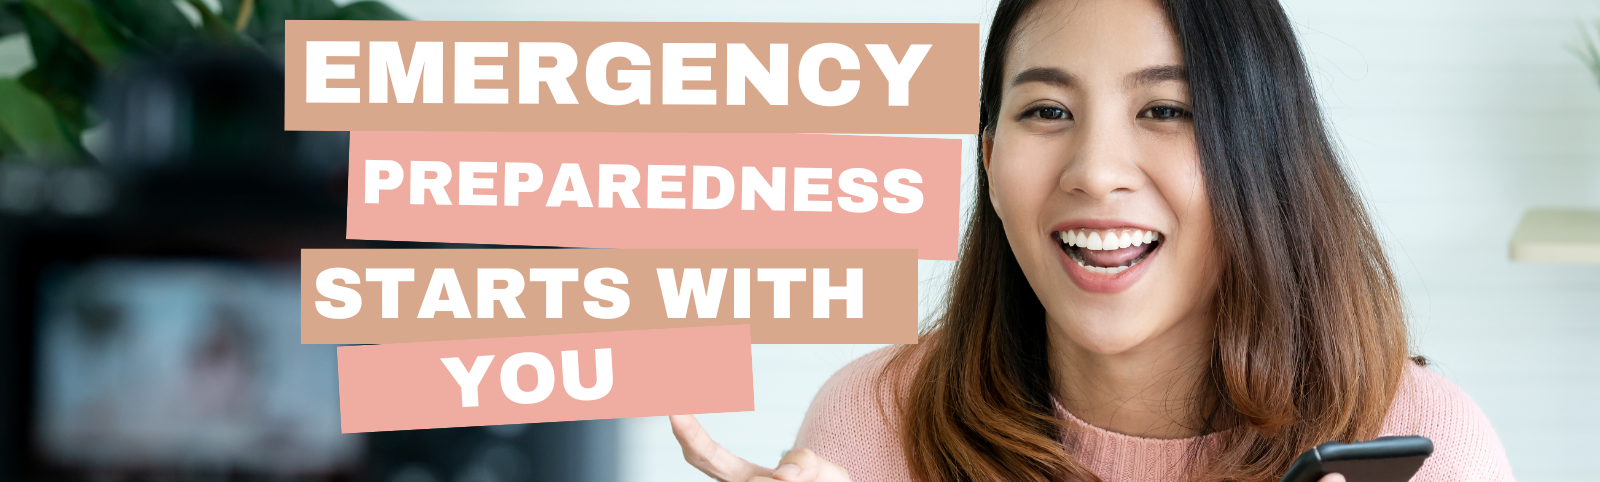 Emergency preparedness starts with you